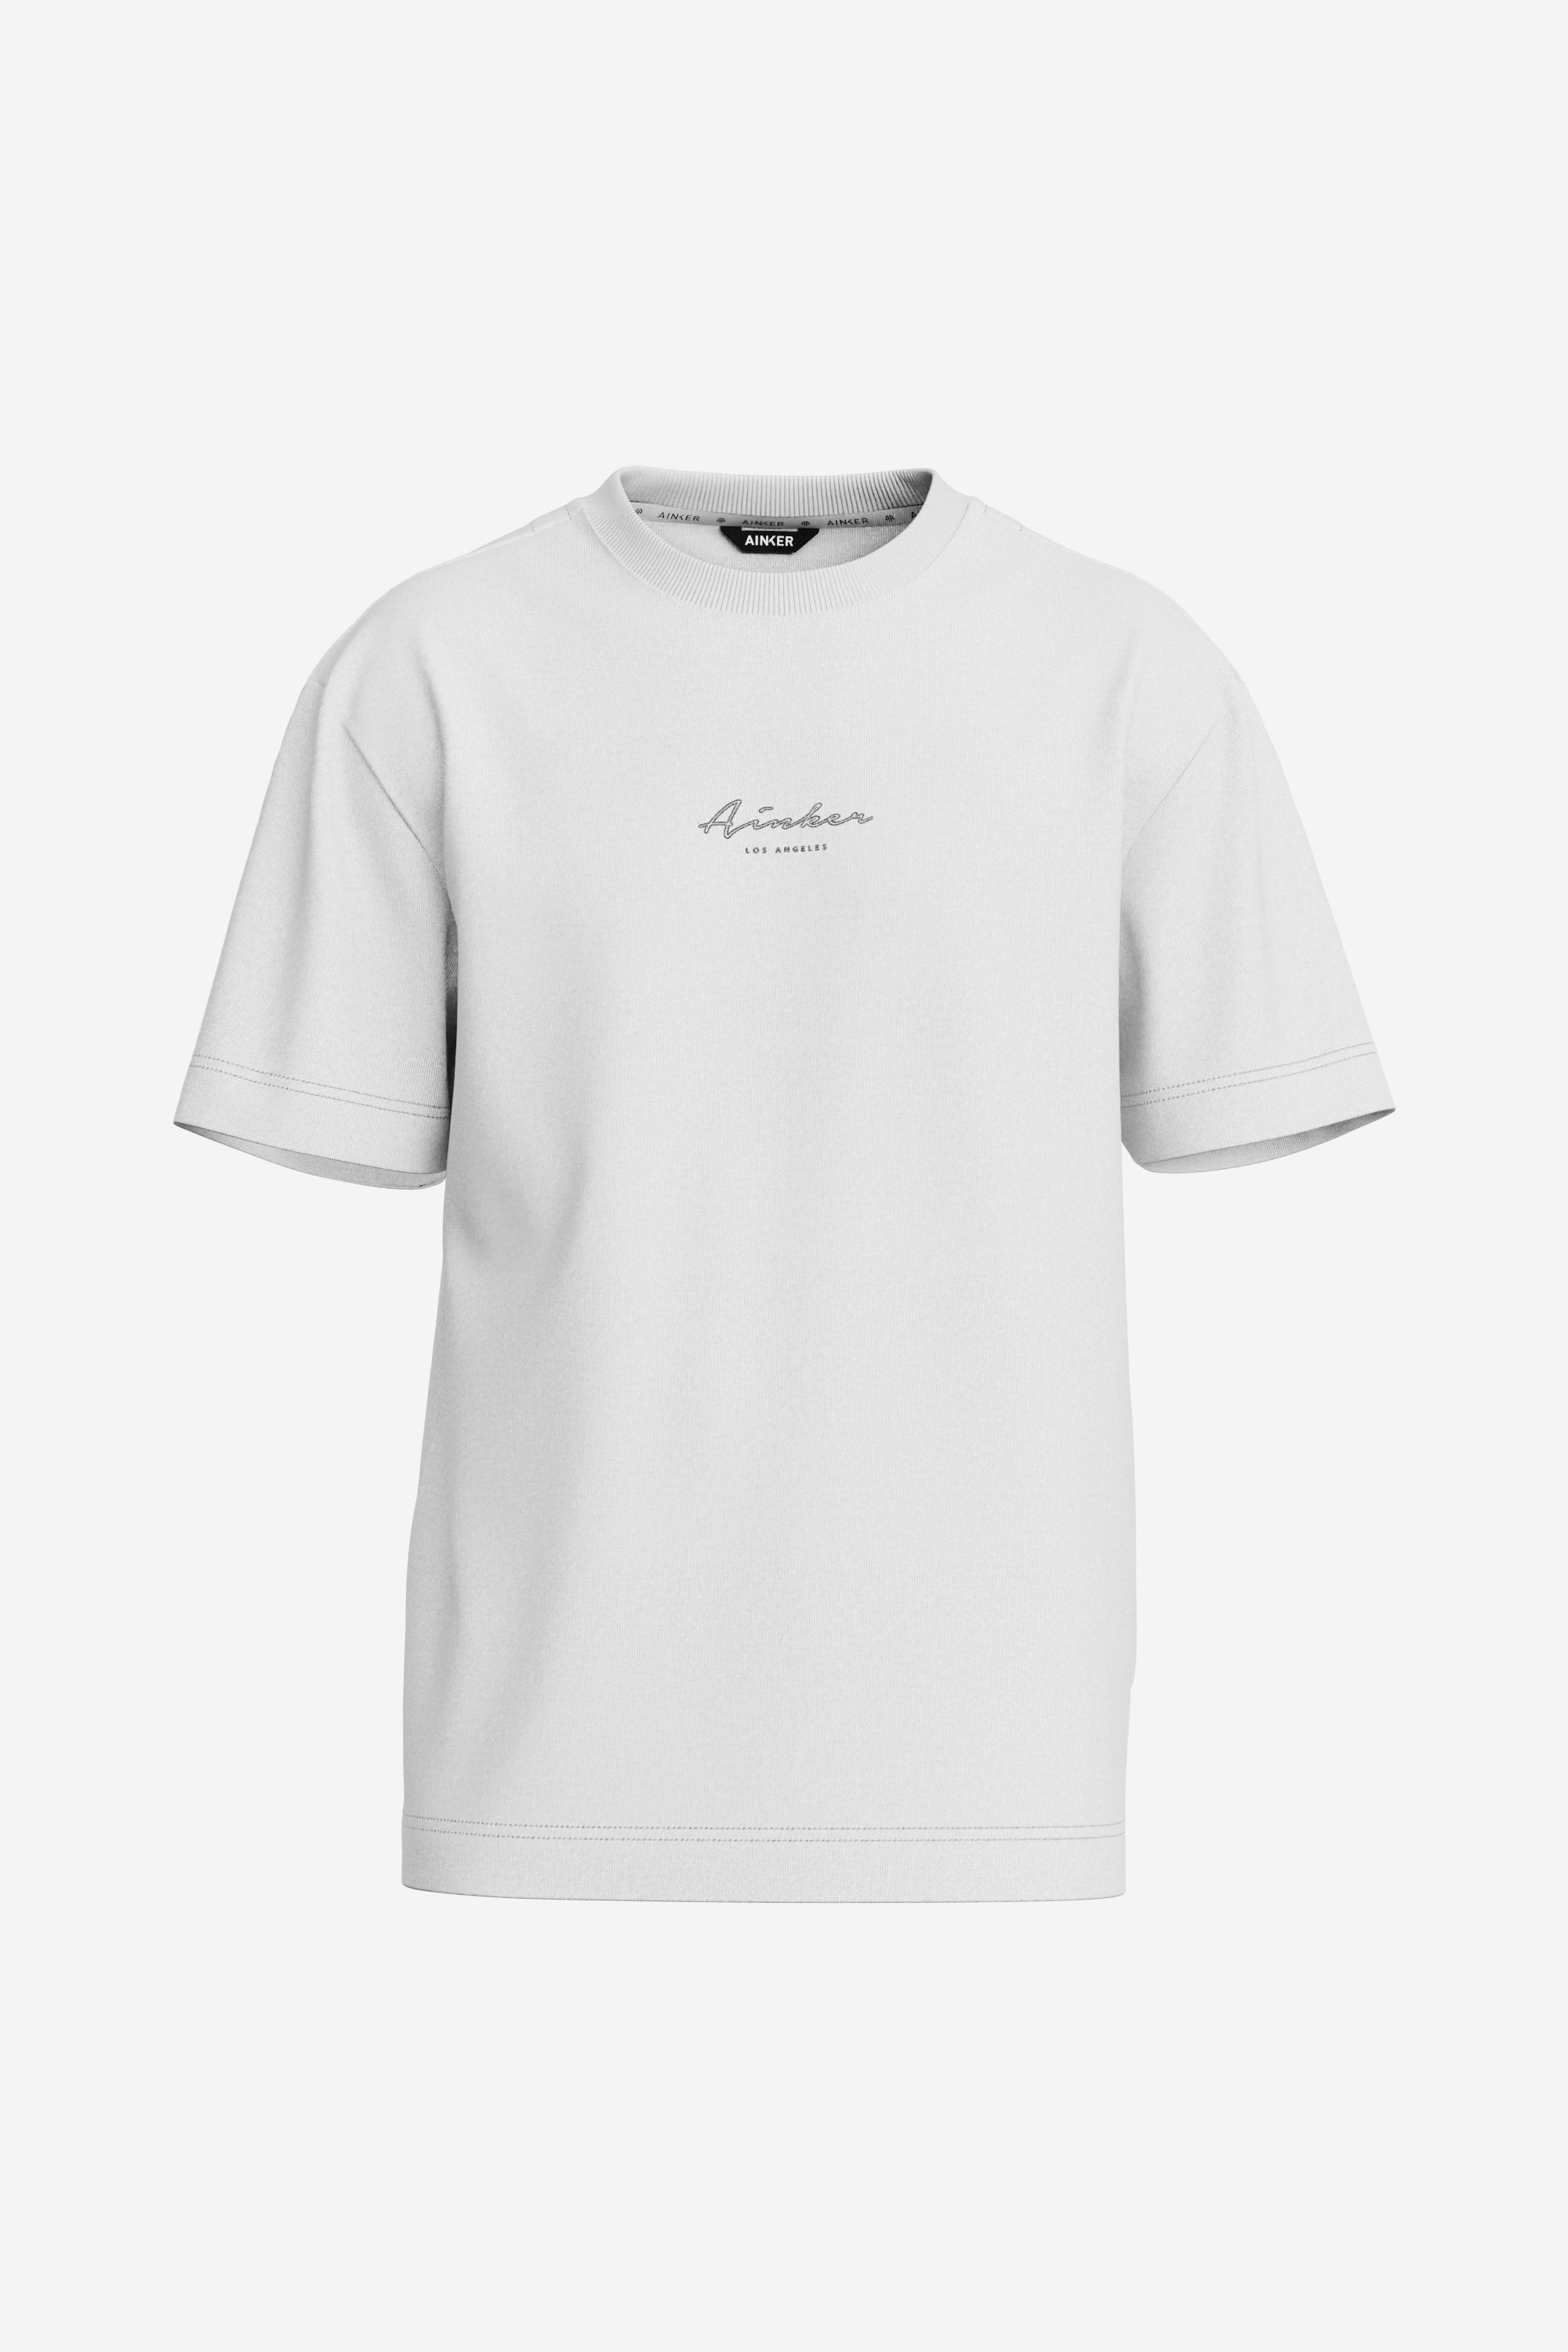 Signiture White Mercerize T-Shirt